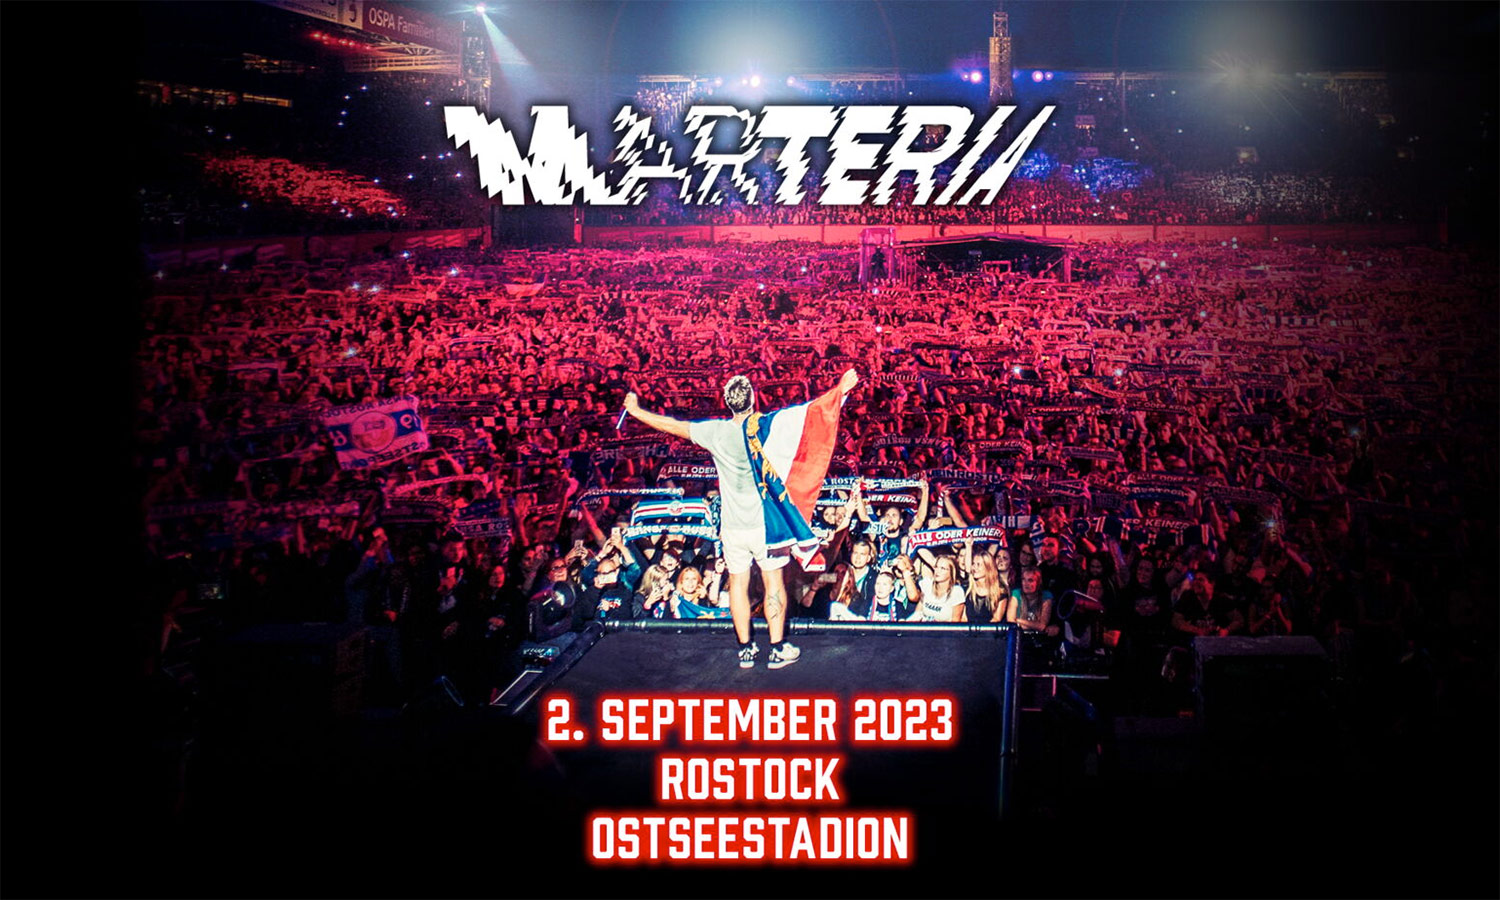 Marteria Ostseestadion Rostock 2023